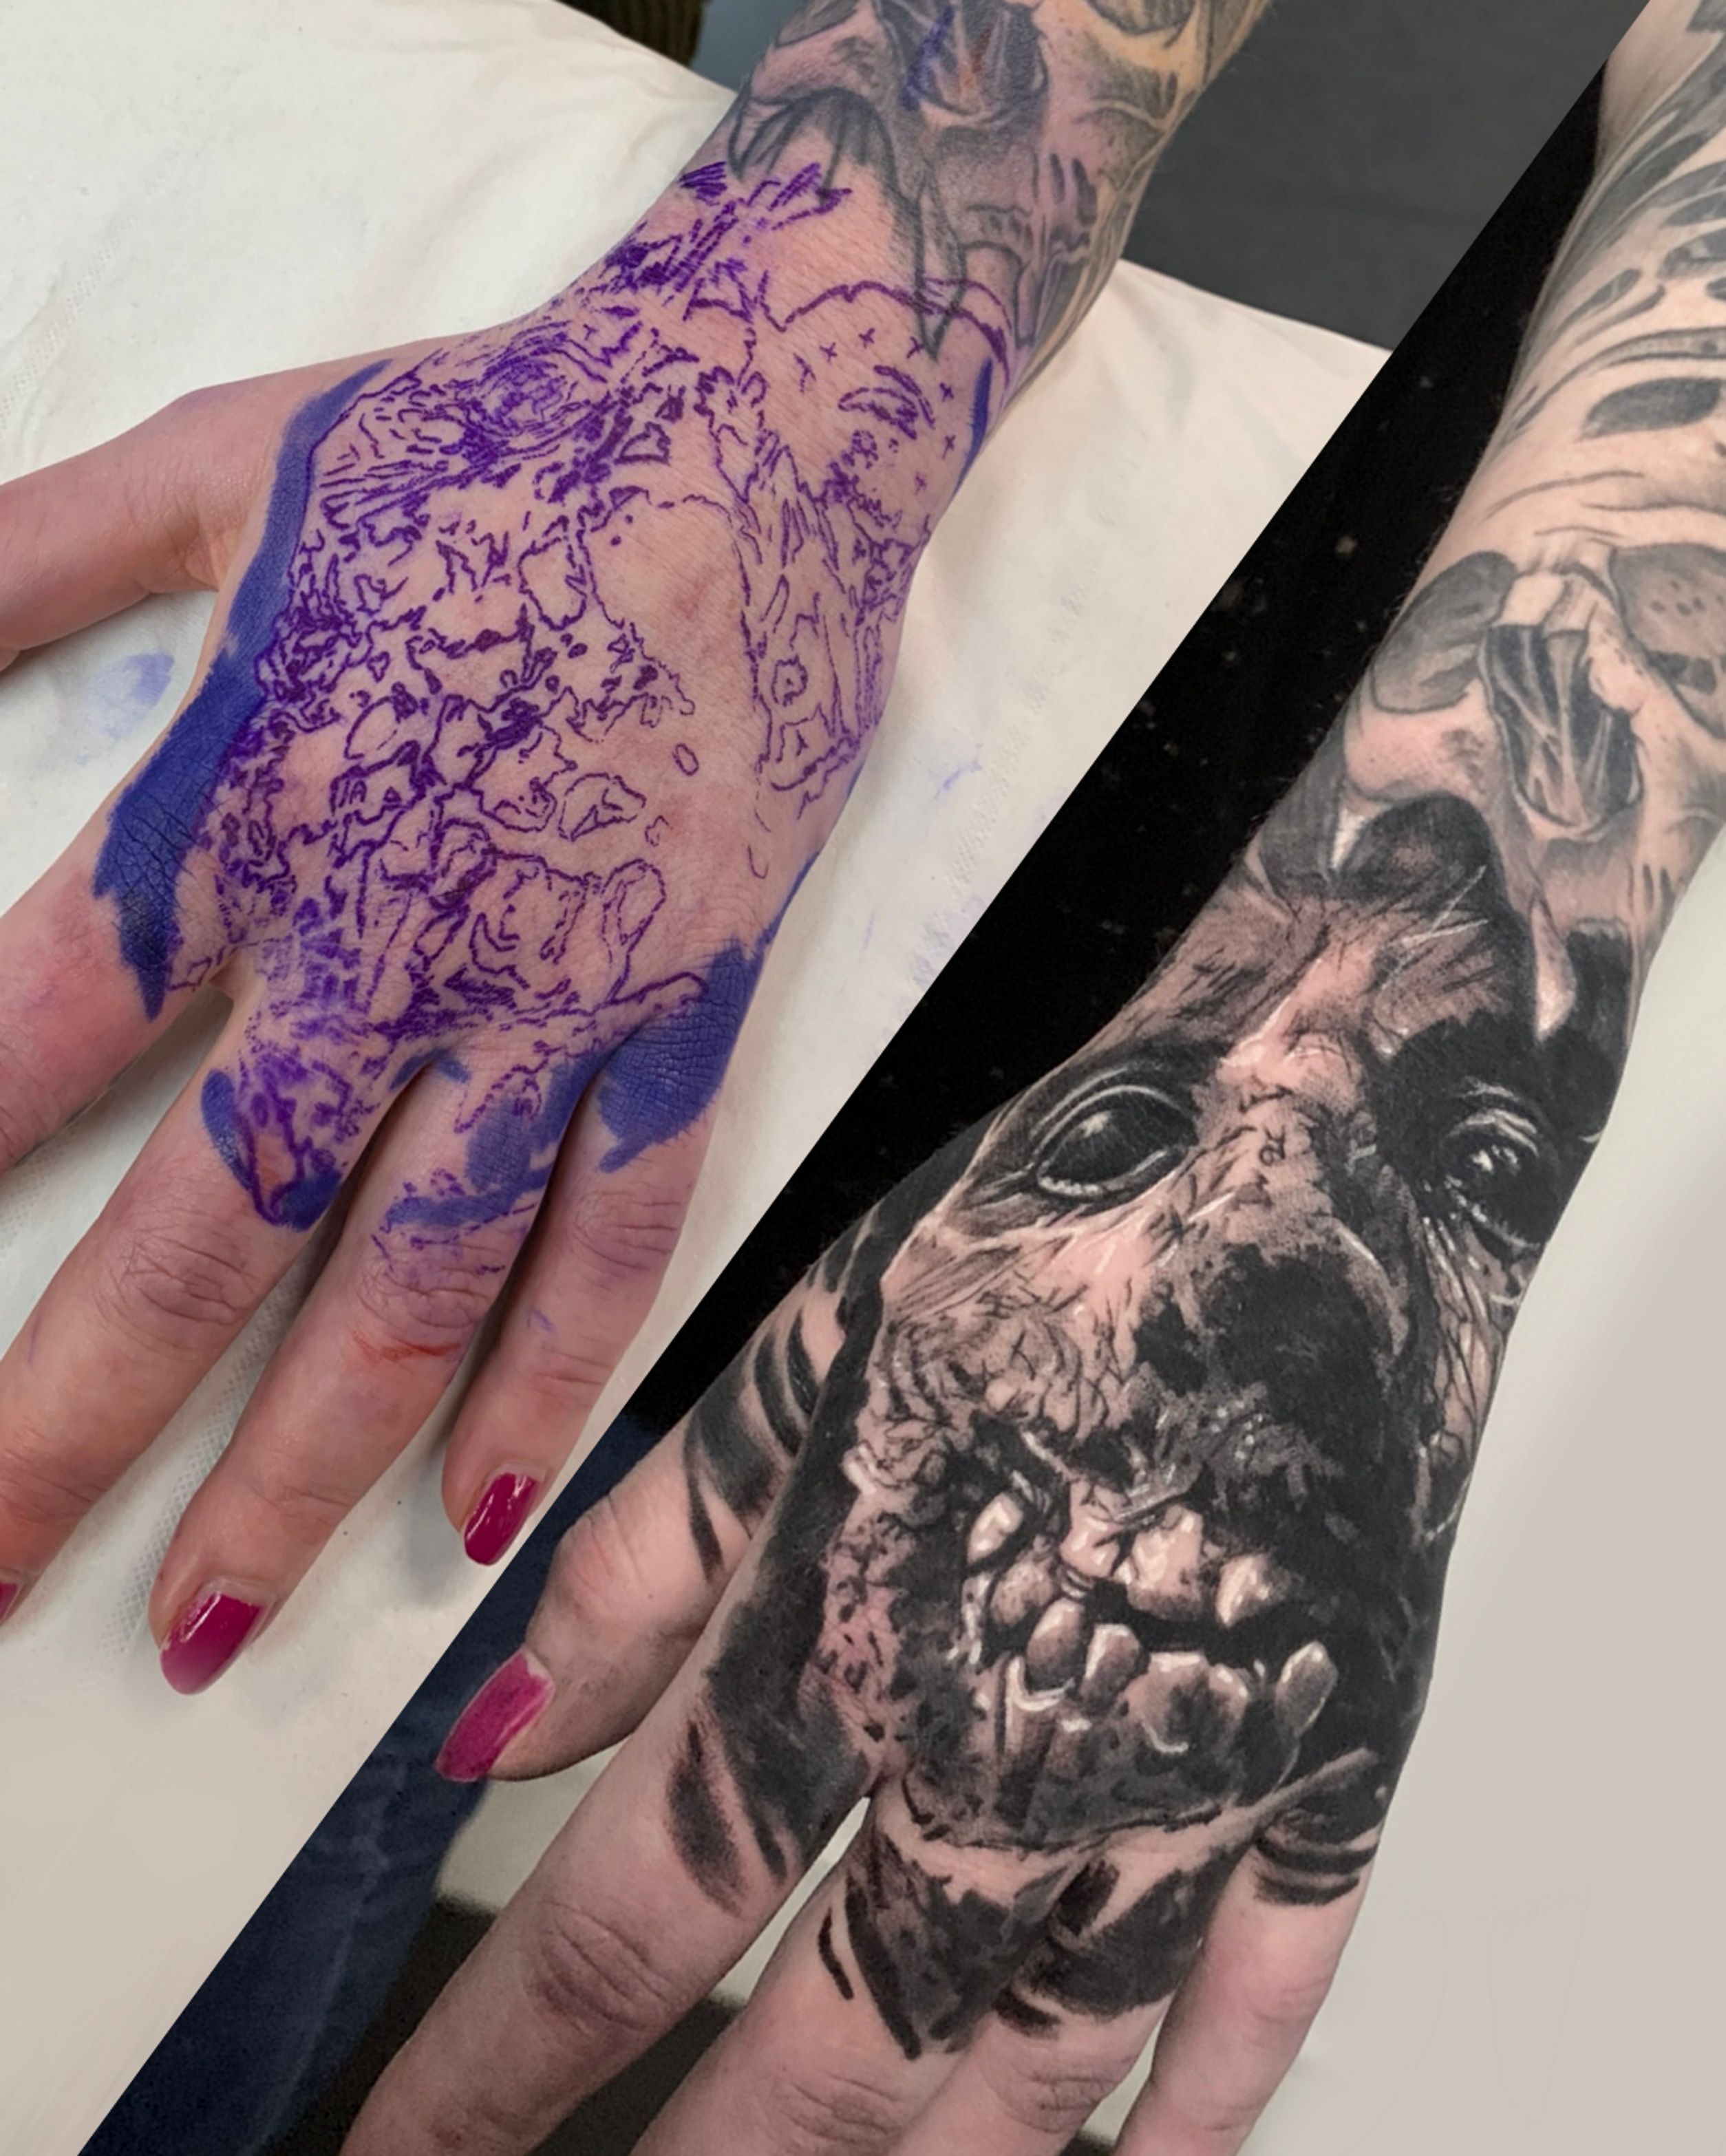 Unify Tattoo Company  Tattoos  New  Severed Zombie Hand holding Heart